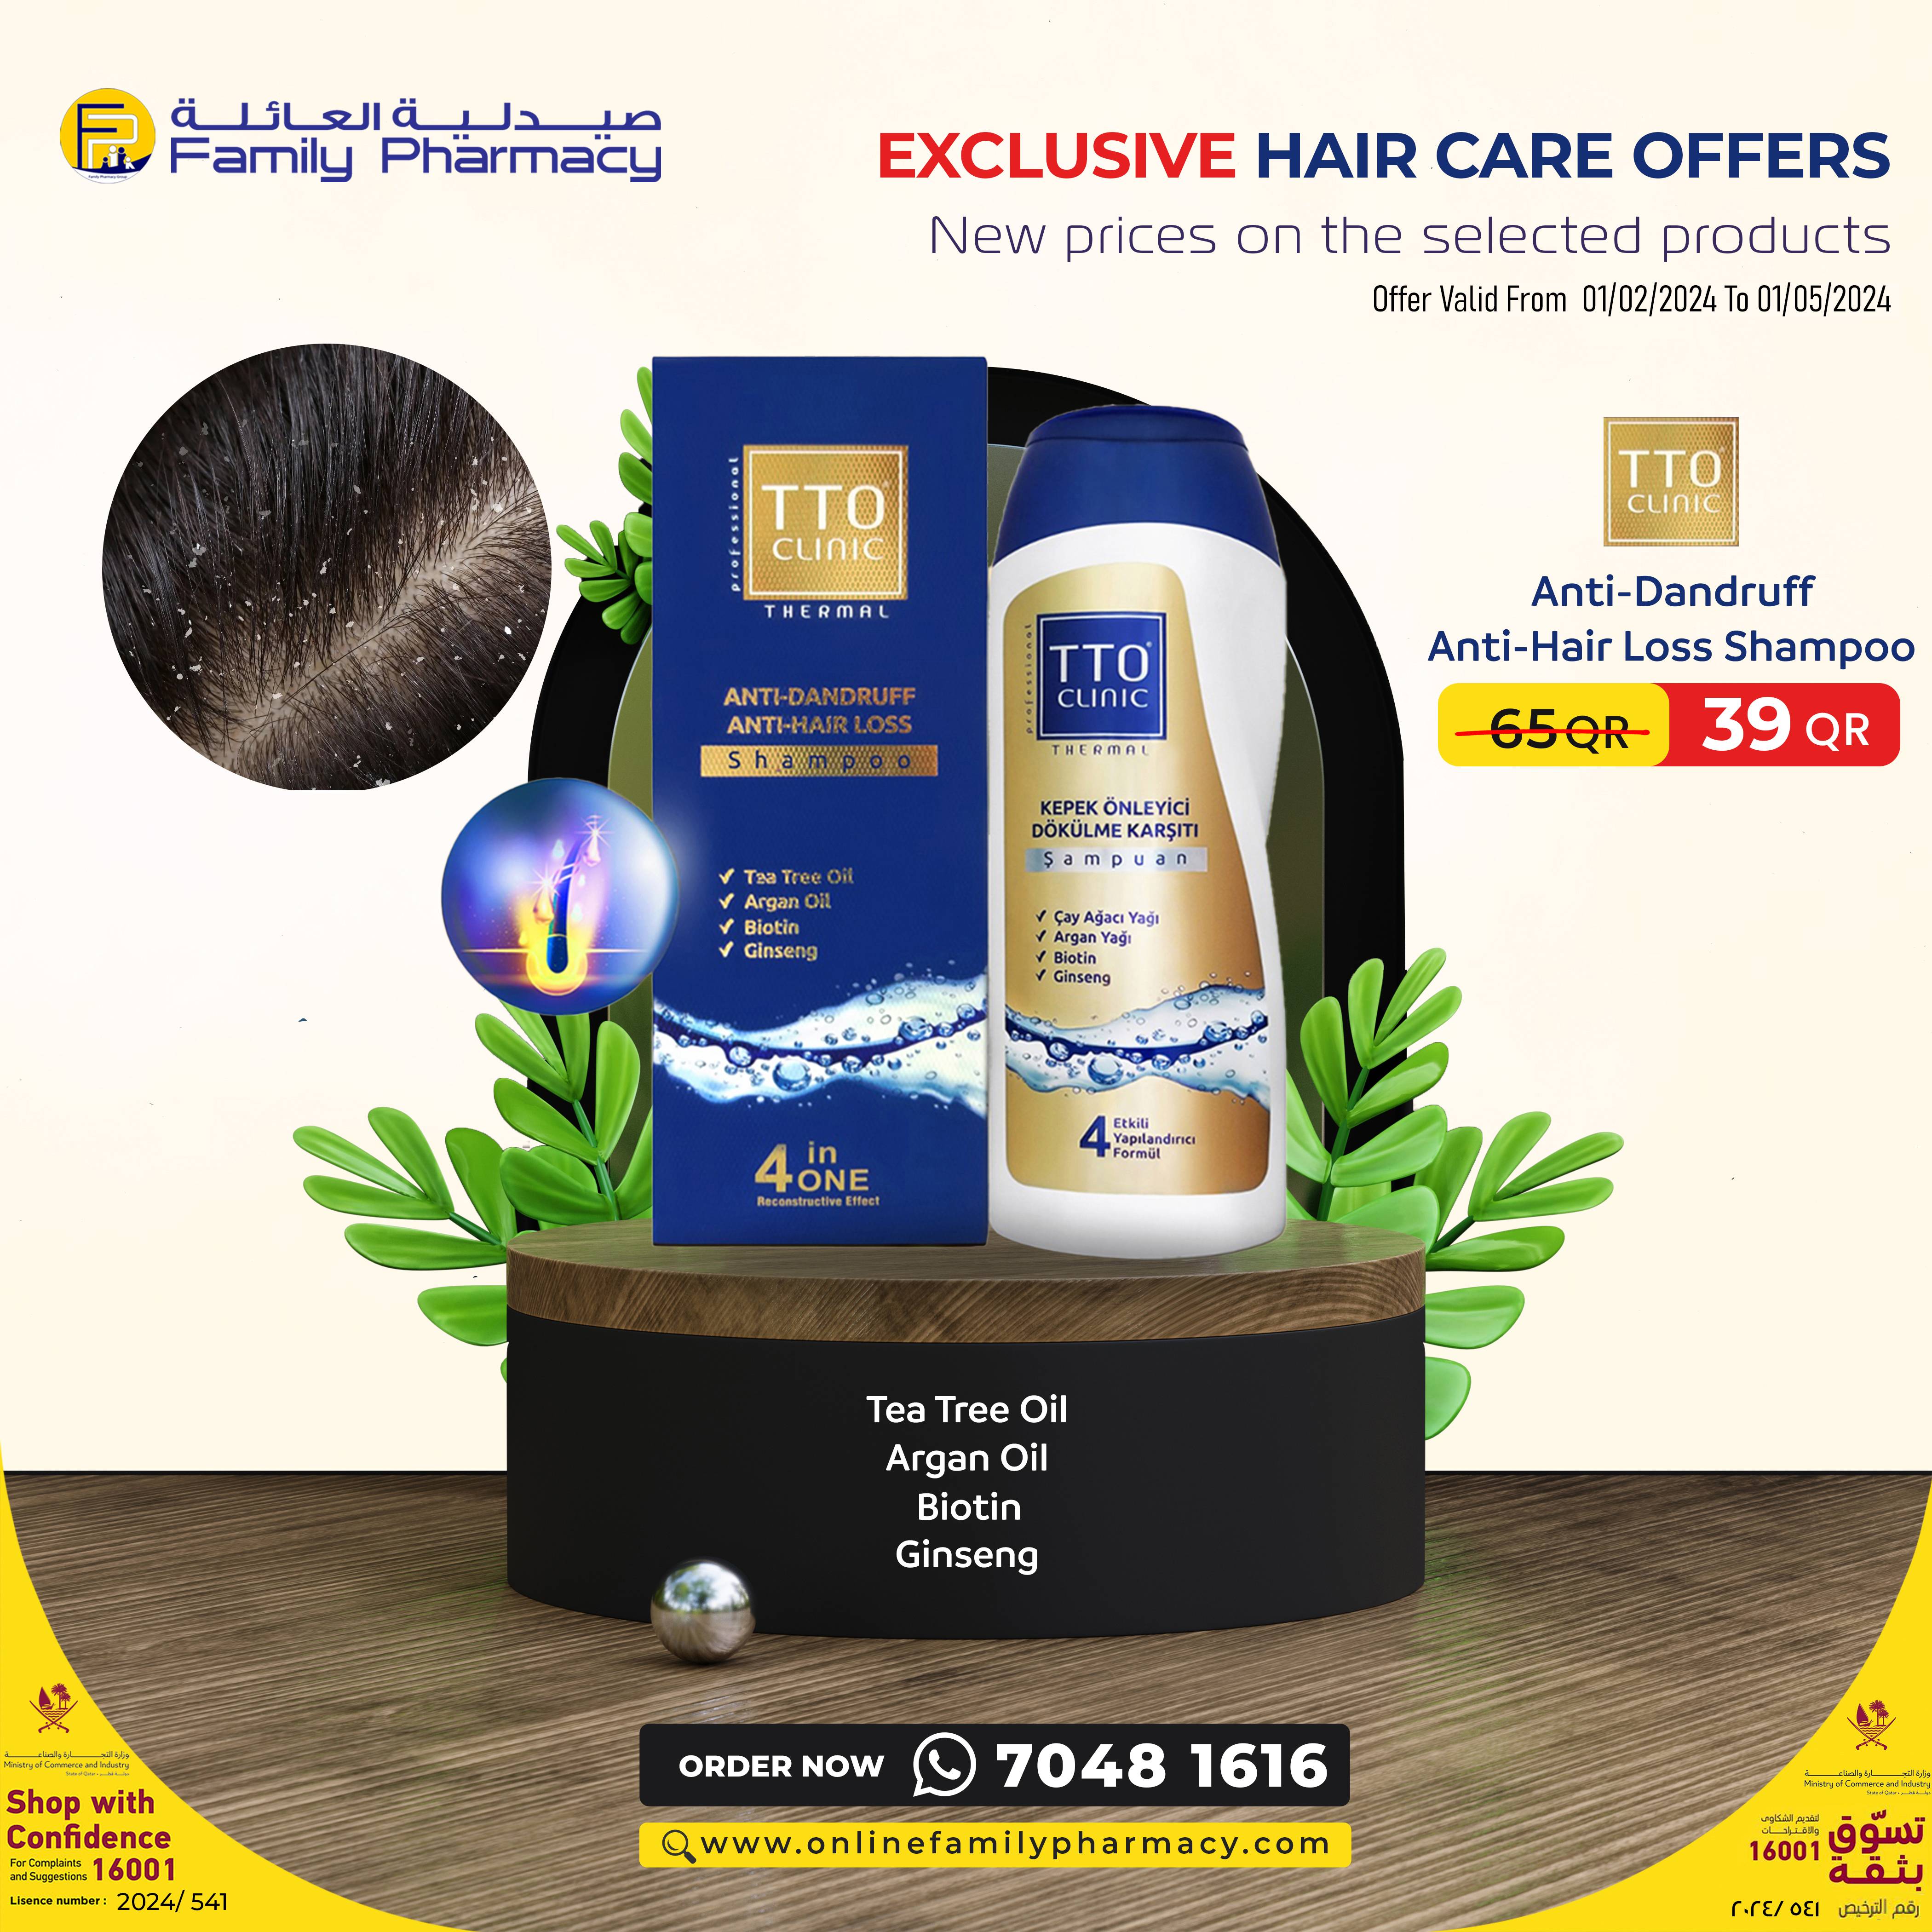 Anti-dandruff Anti-hair Loss Shampoo 400ml -tto (offer) product available at family pharmacy online buy now at qatar doha